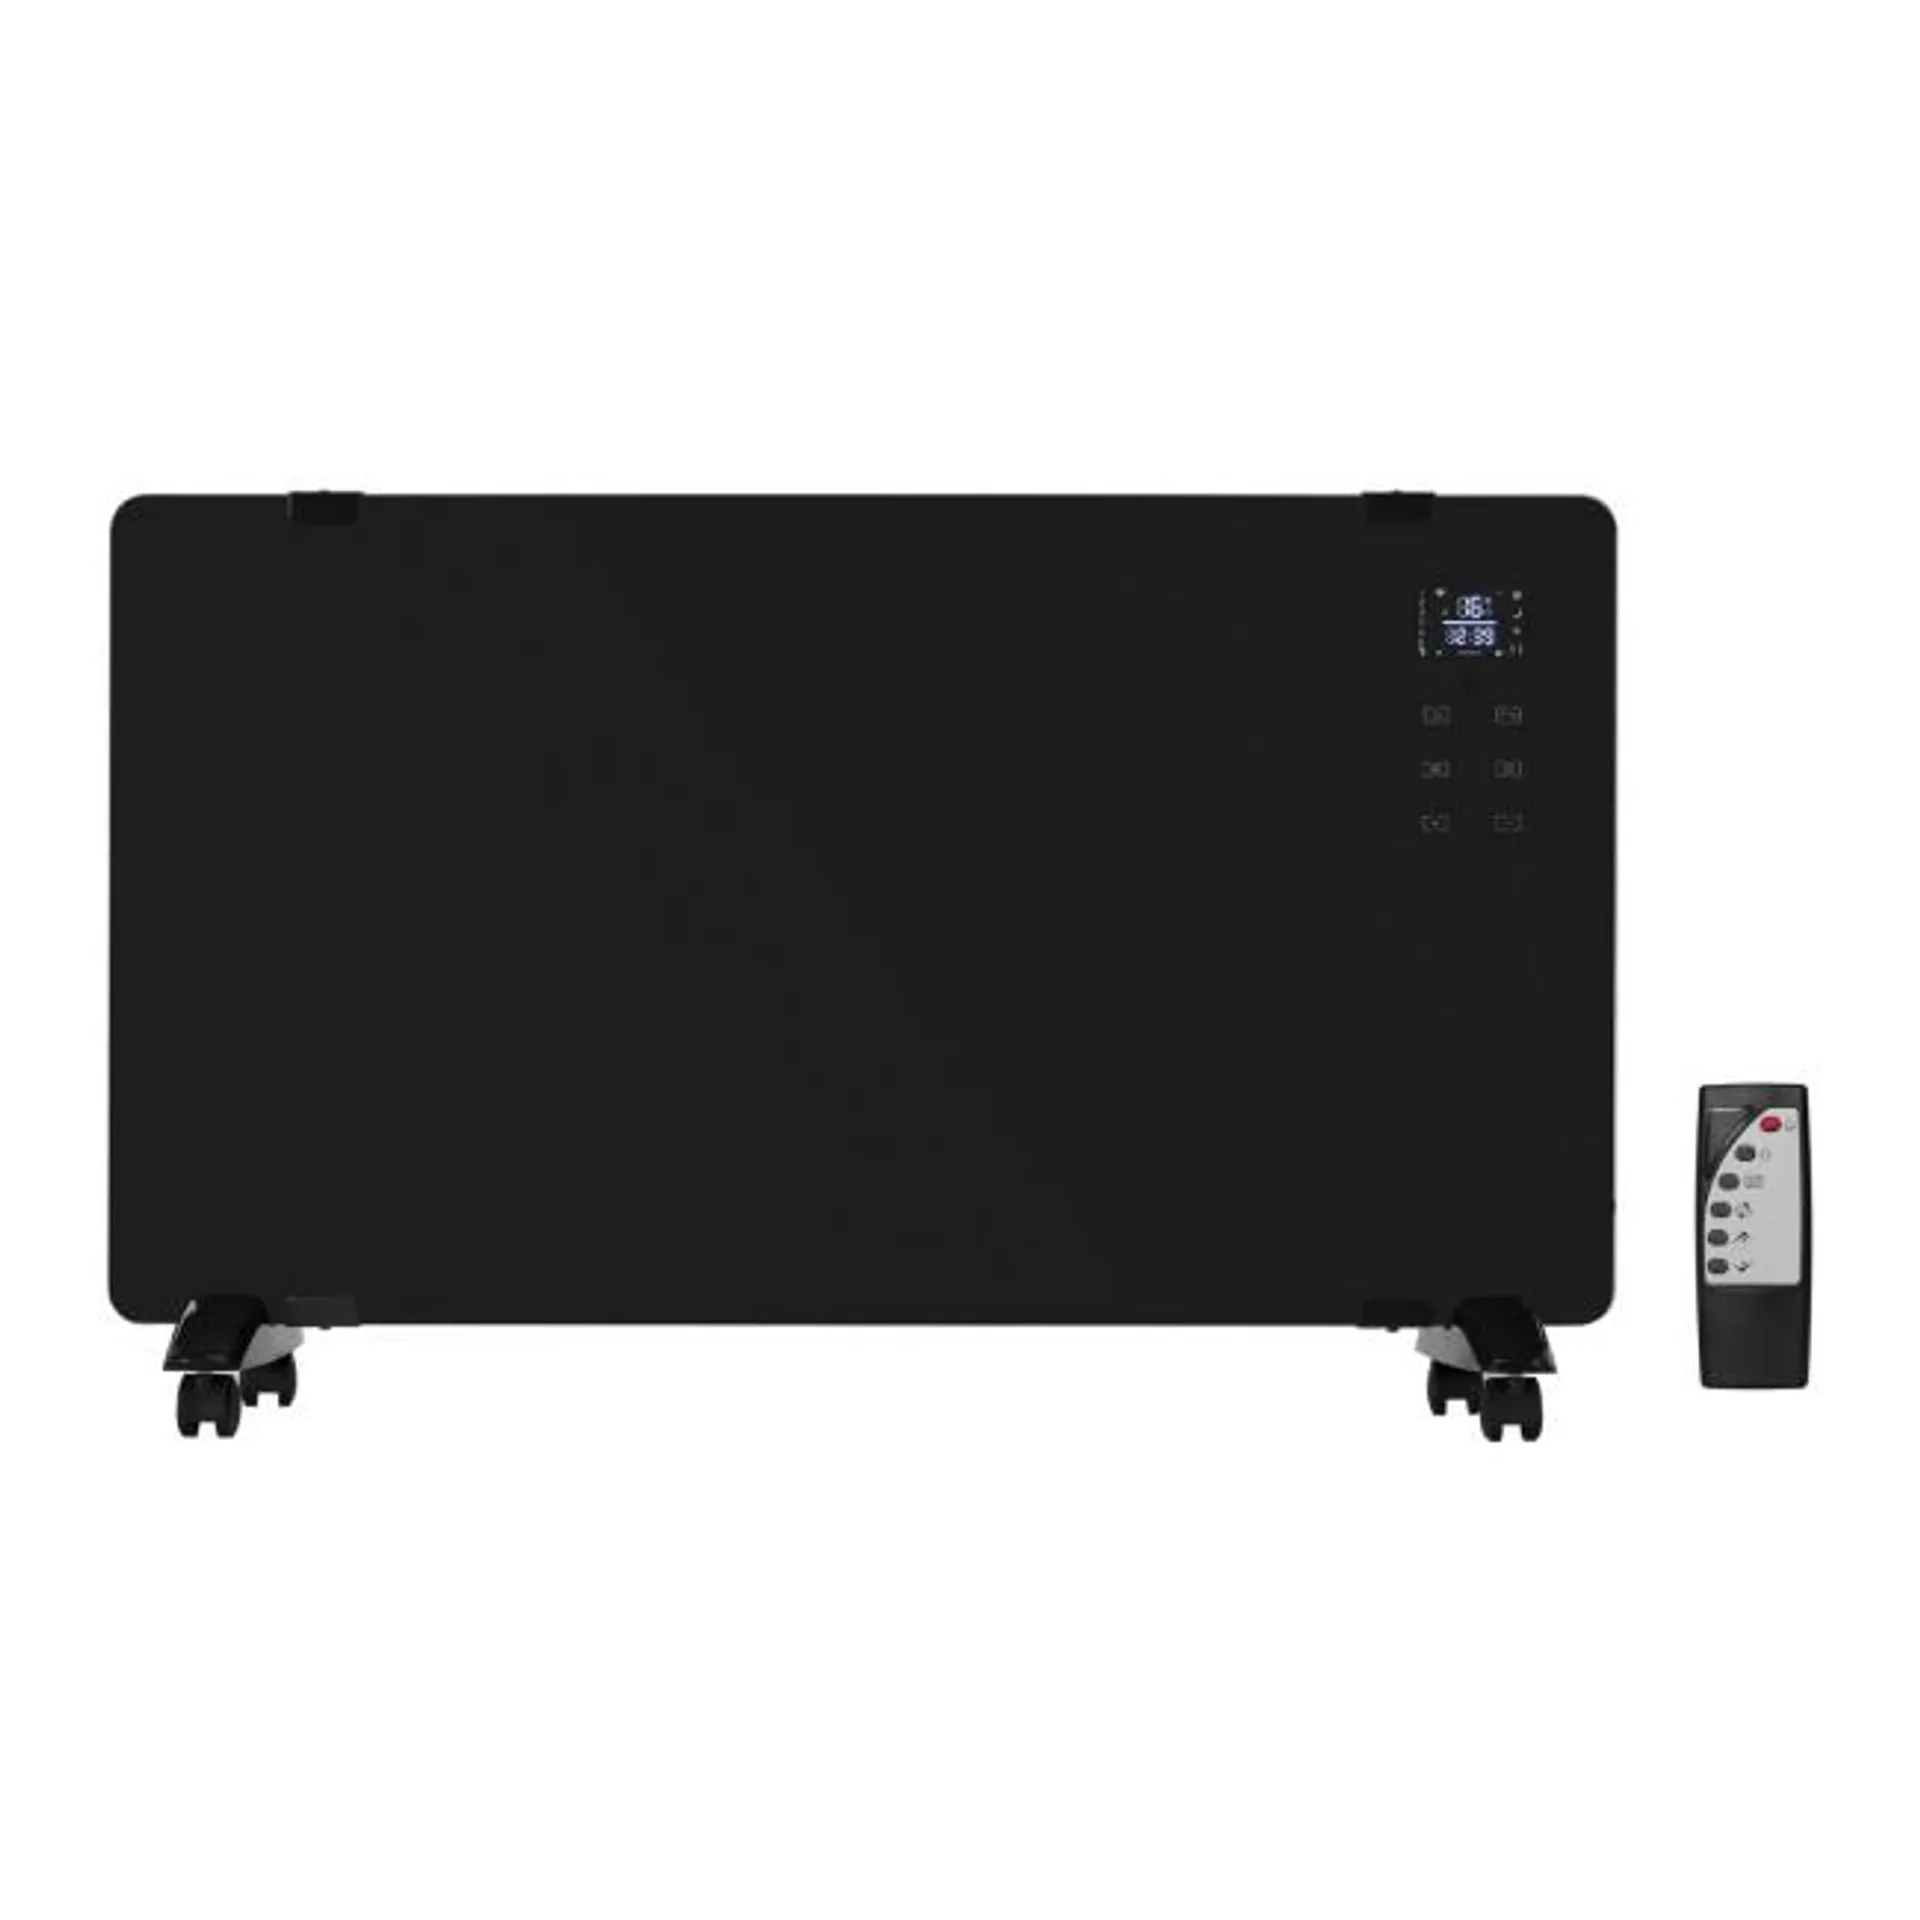 electriQ 2000W Wall Mountable Convection Panel Heater H460xW830- Black